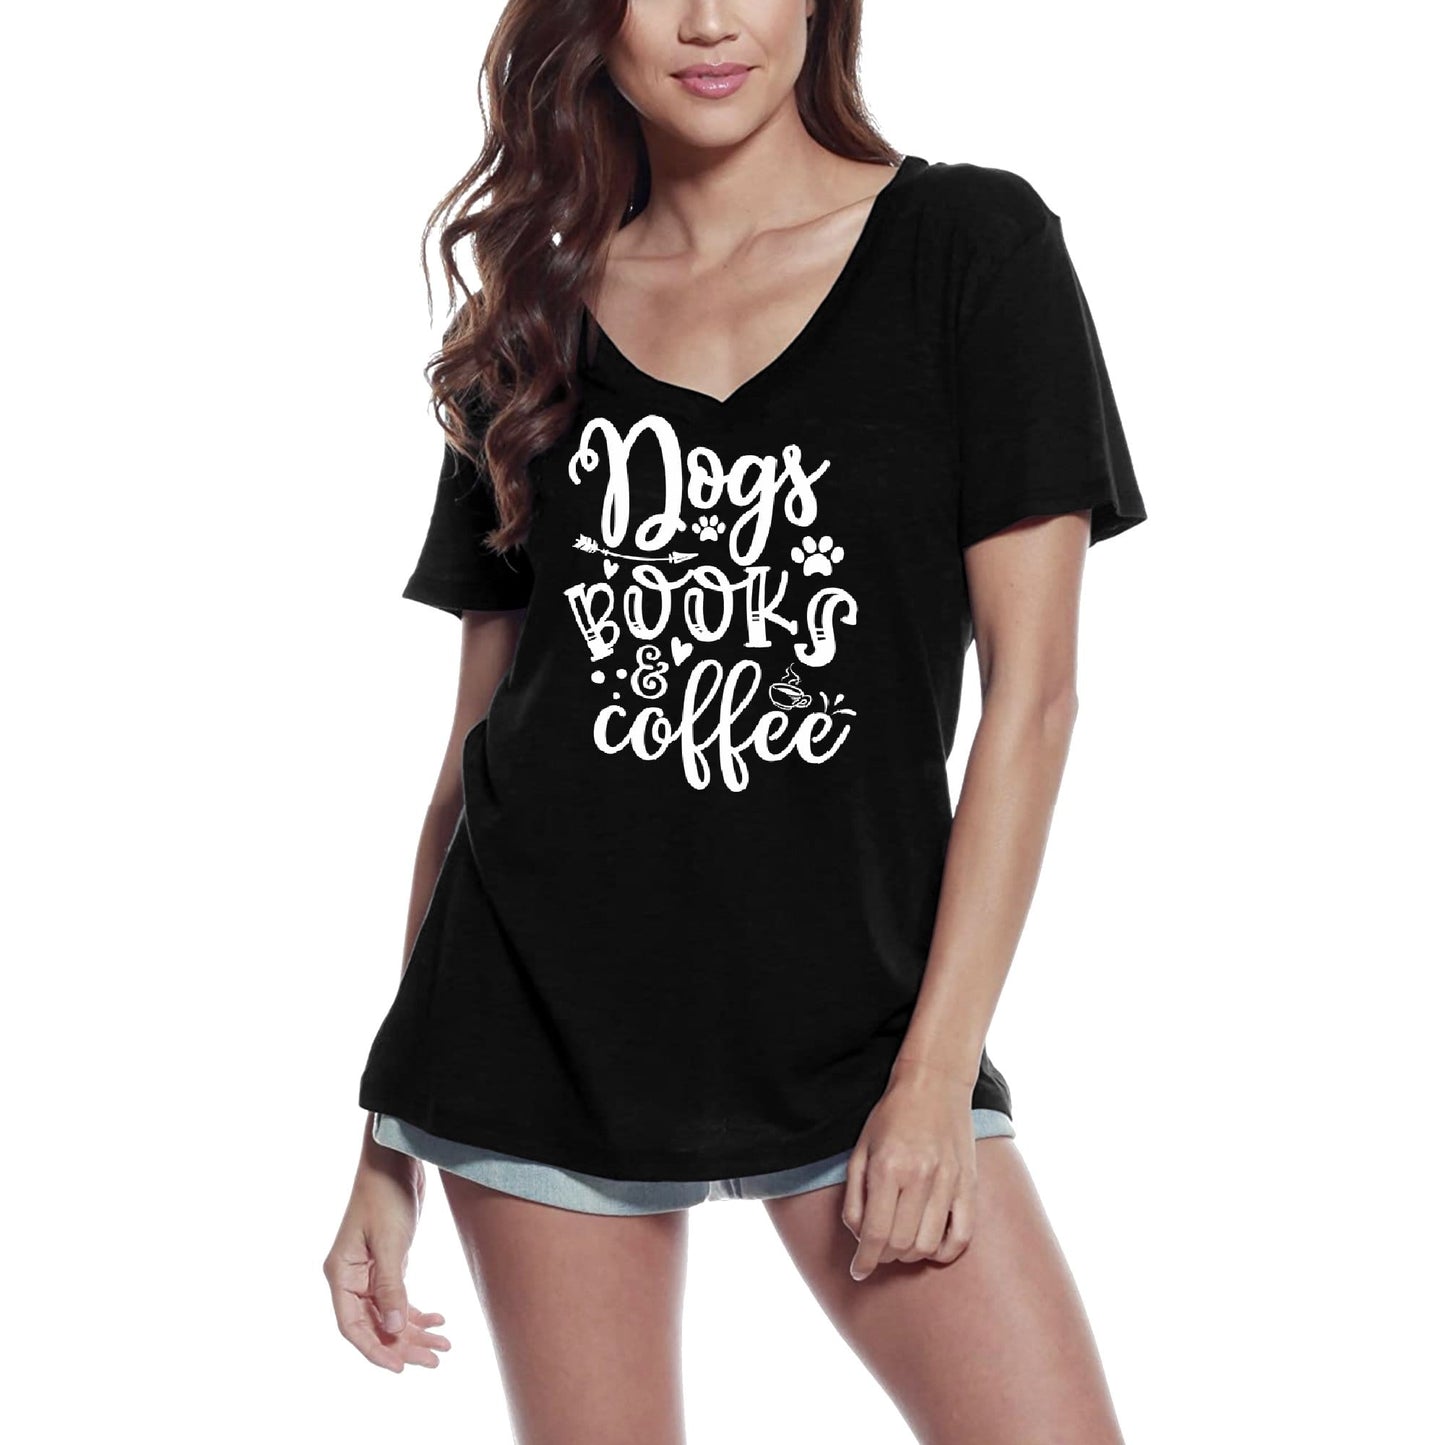 ULTRABASIC Women's T-Shirt Dogs Books Coffee - Funny Short Sleeve Tee Shirt